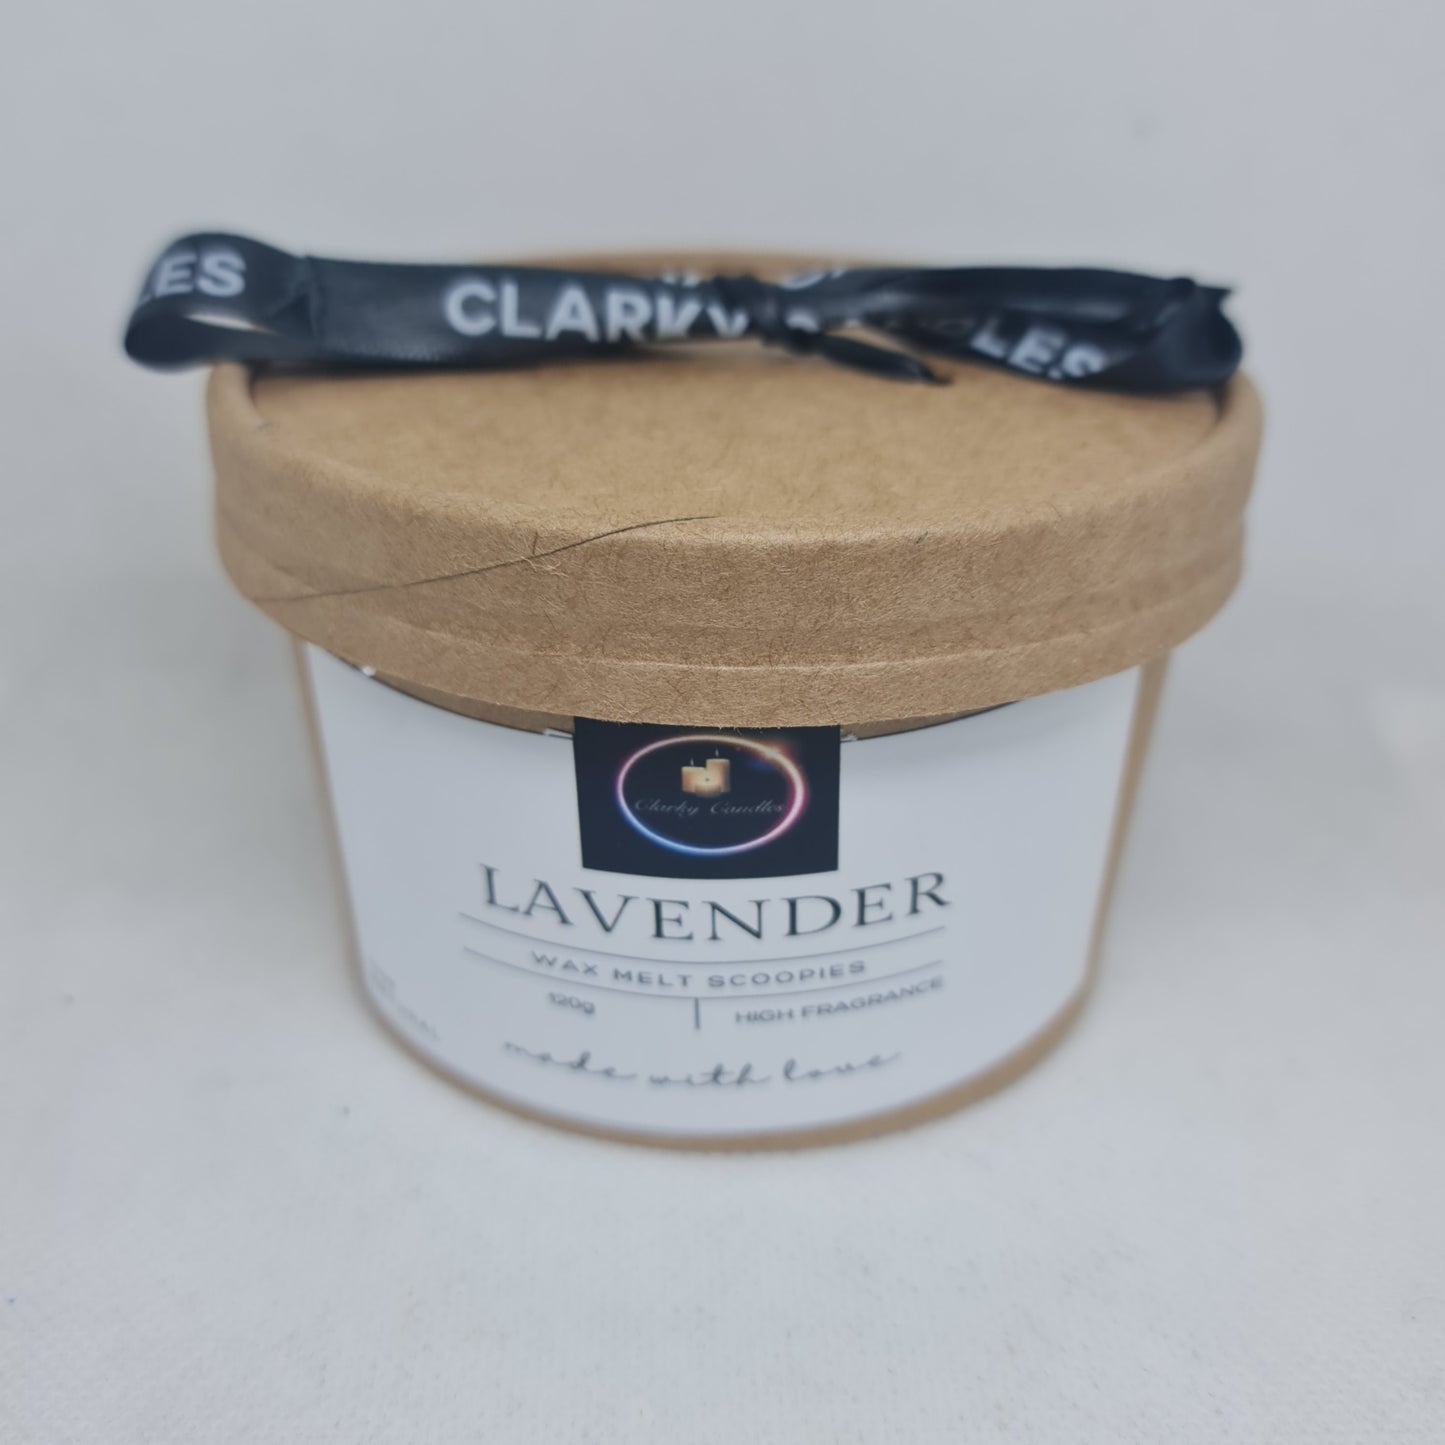 Lavender - Wax Melt Scoopies - 120g